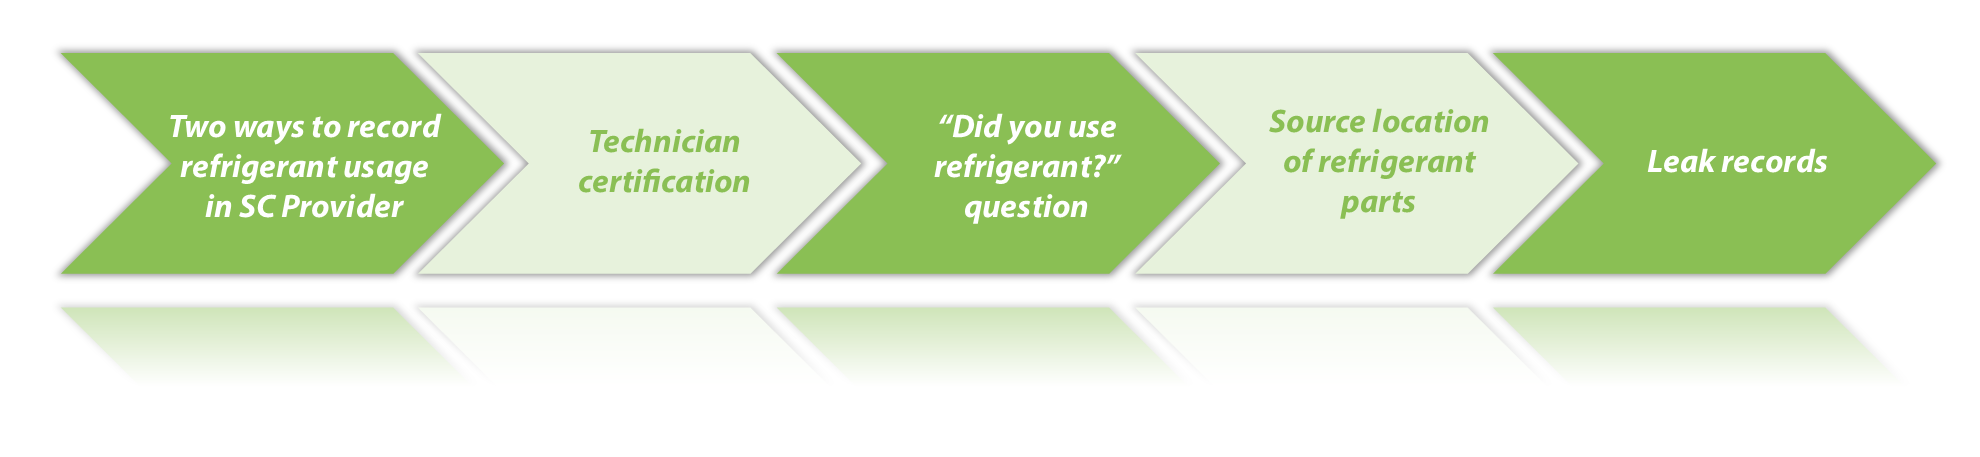 Key aspects of recording refrigerant usa